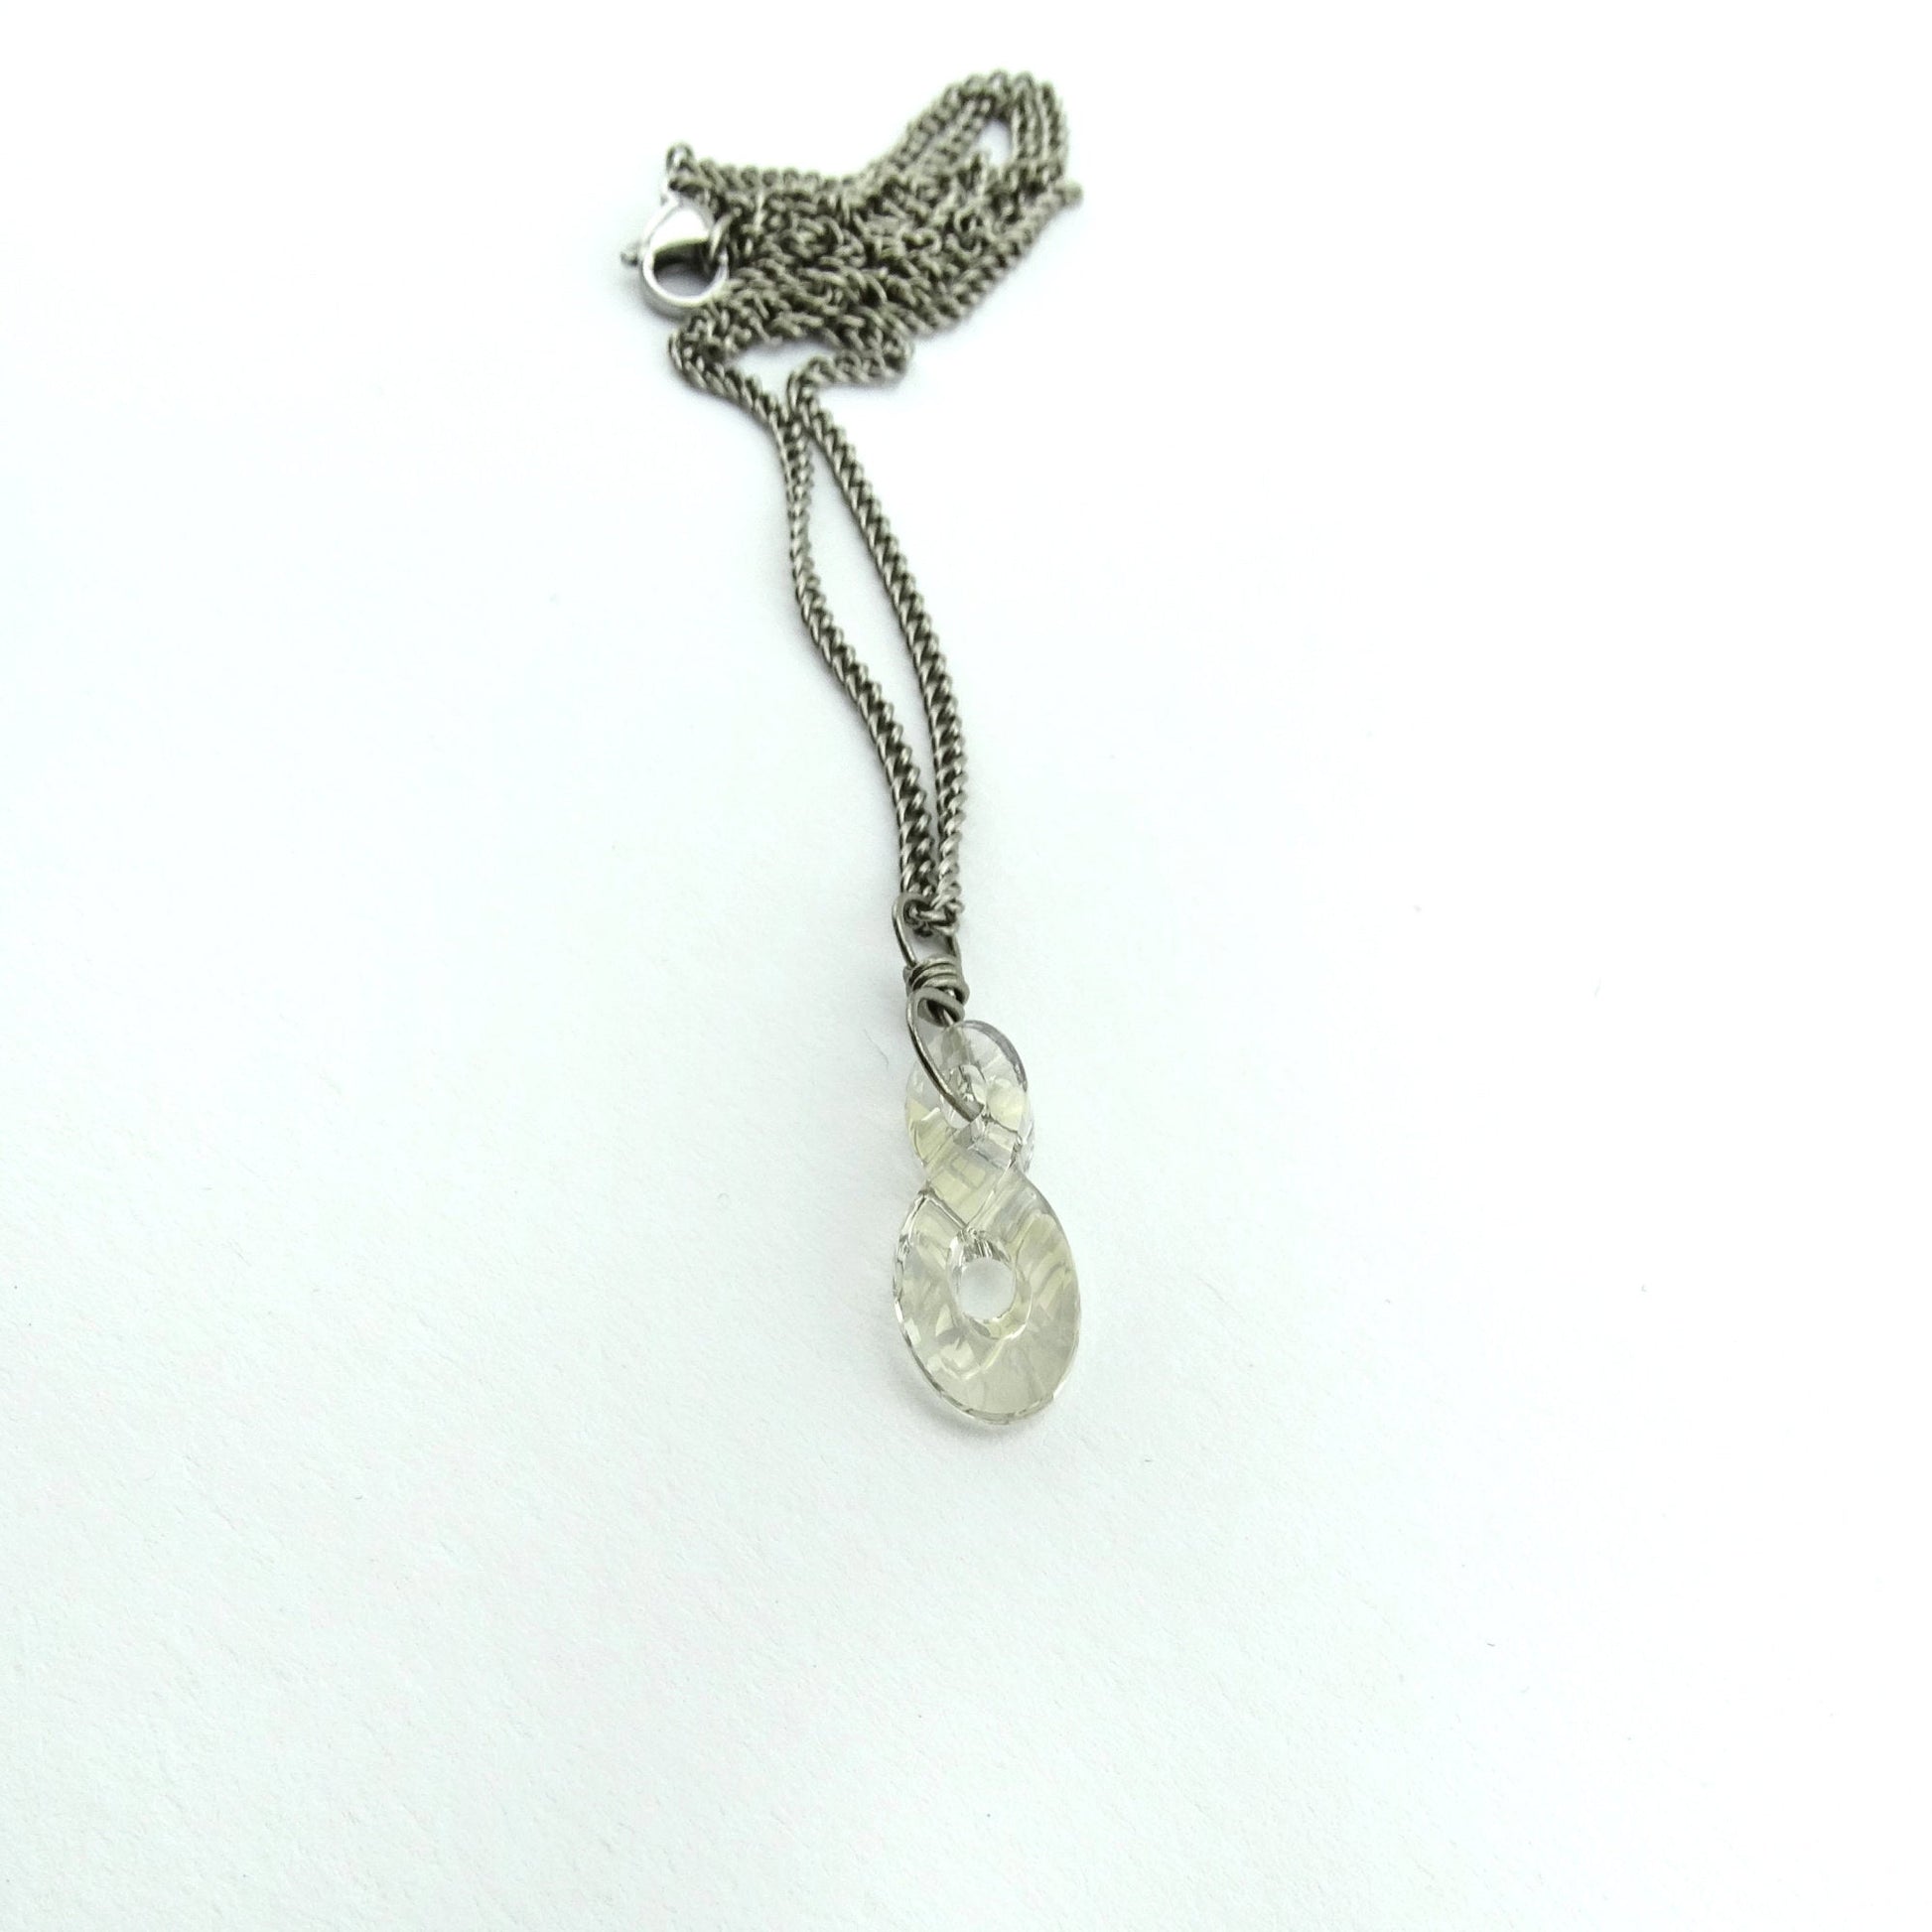 Silver Shade Infinity Symbol Titanium Necklace, Eternity Swarovski Crystal, Nickel Free Hypoallergenic Niobium, Necklace for Sensitive Skin